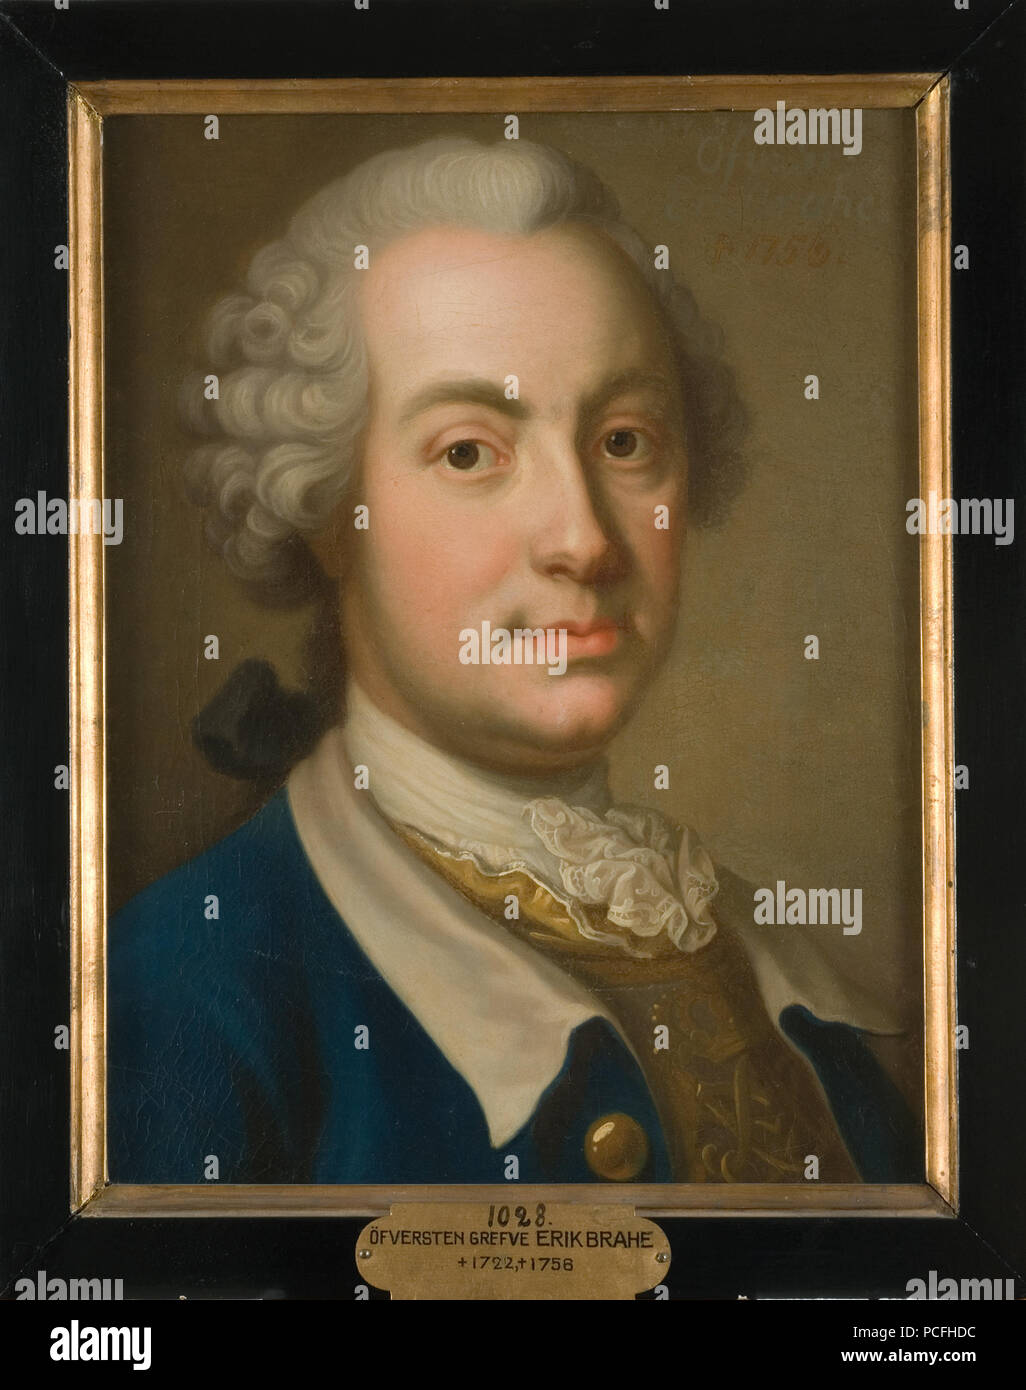 32 Erik Brahe, 1722-1756 (Magnus Hallman) - Nationalmuseum - 15698 Stock Photo